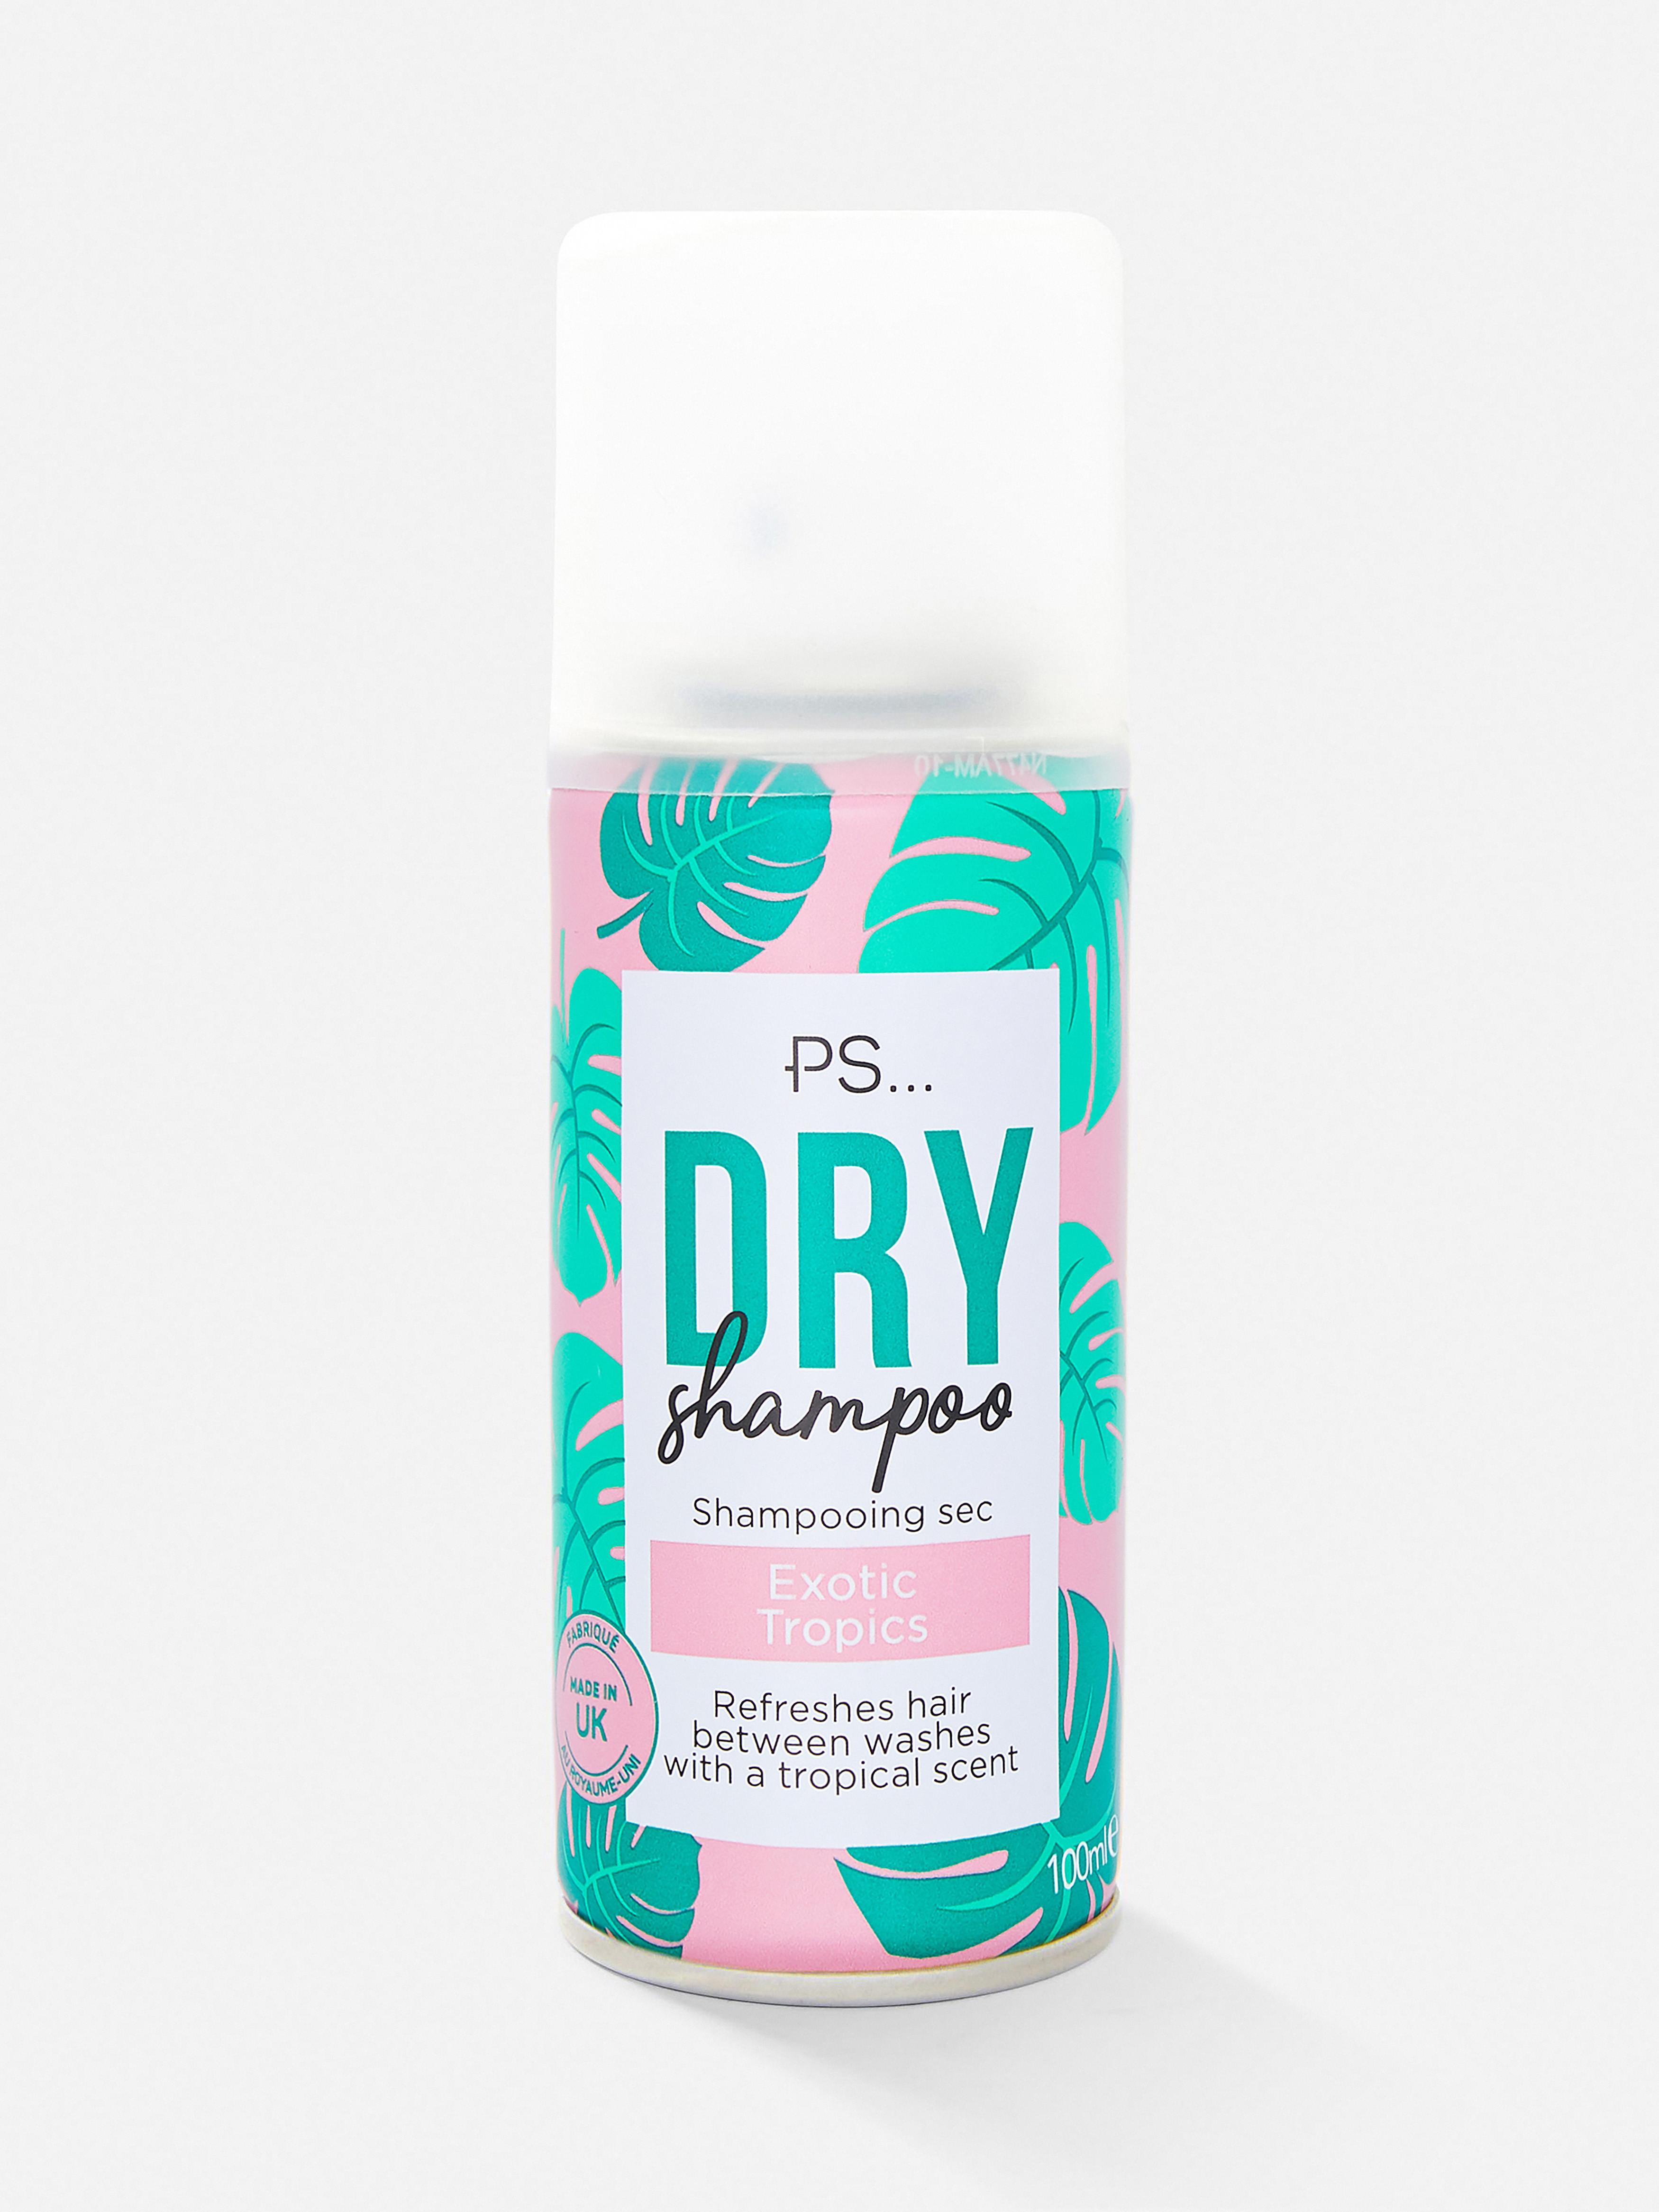 PS... Exotic Tropics Dry Shampoo